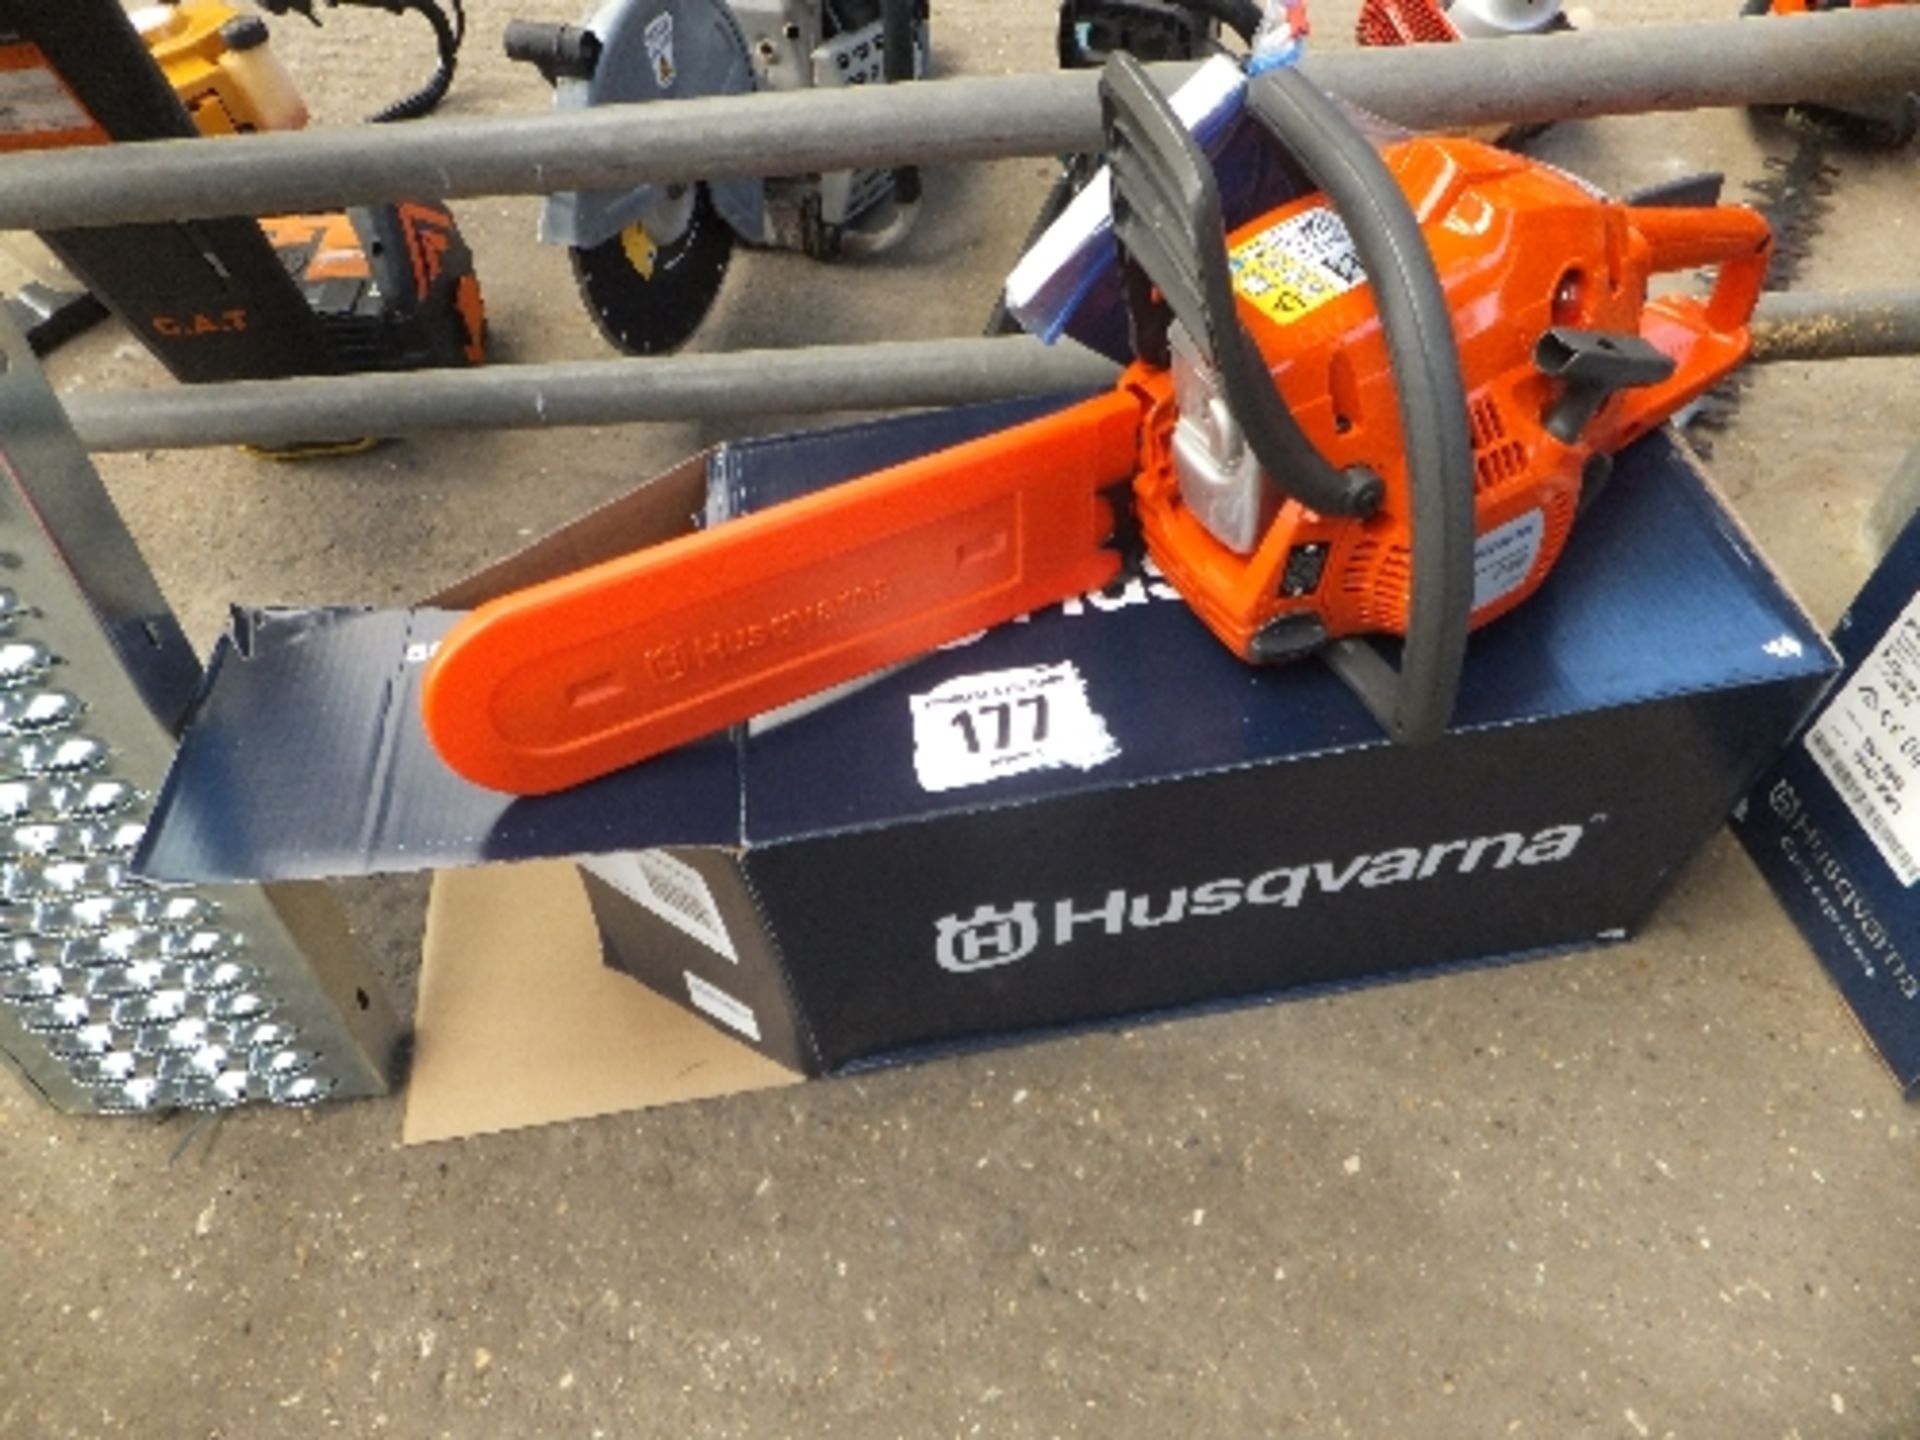 Boxed Husqvarna 235 14in petrol chain saw